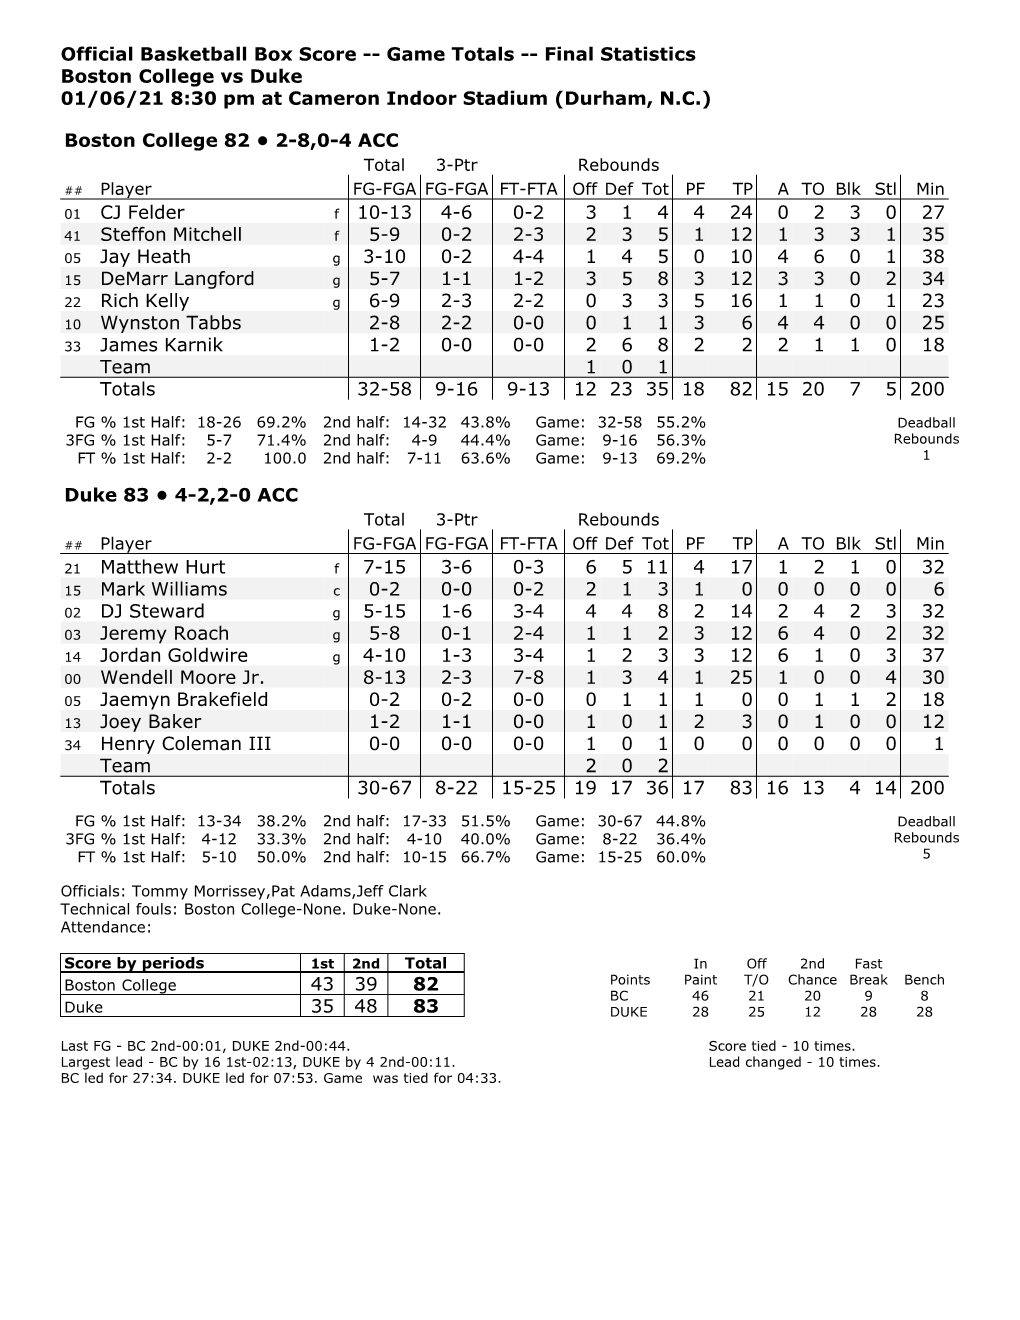 Official Basketball Box Score -- Game Totals -- Final Statistics Boston College Vs Duke 01/06/21 8:30 Pm at Cameron Indoor Stadium (Durham, N.C.)